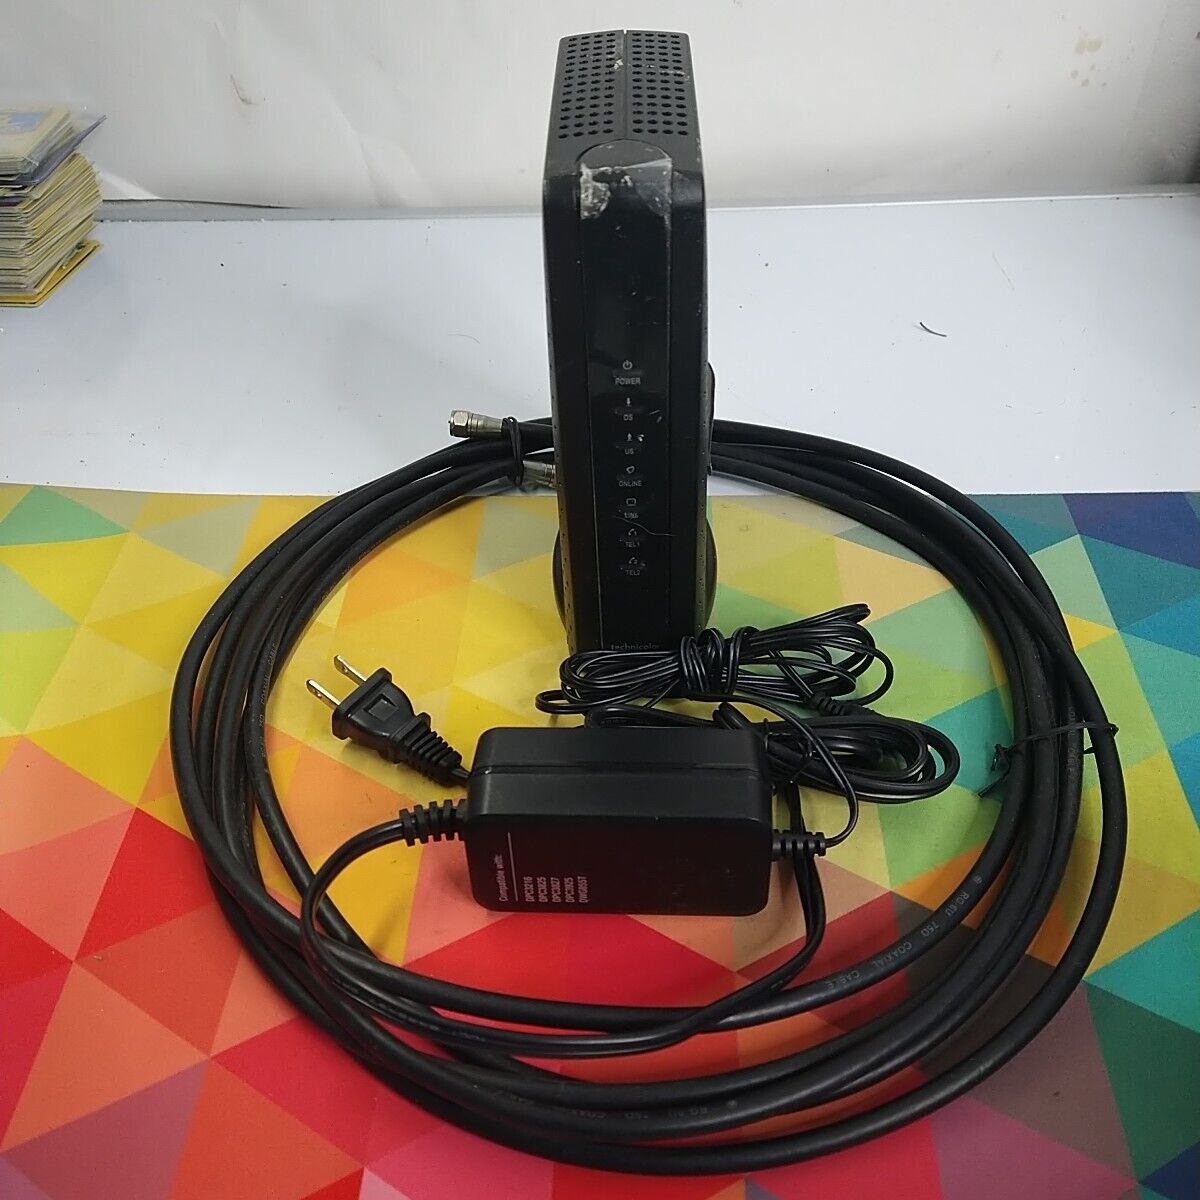 Technicolor/Cisco DPC3216 Cable Modem w/ Power cord & COAX Cable WORKING